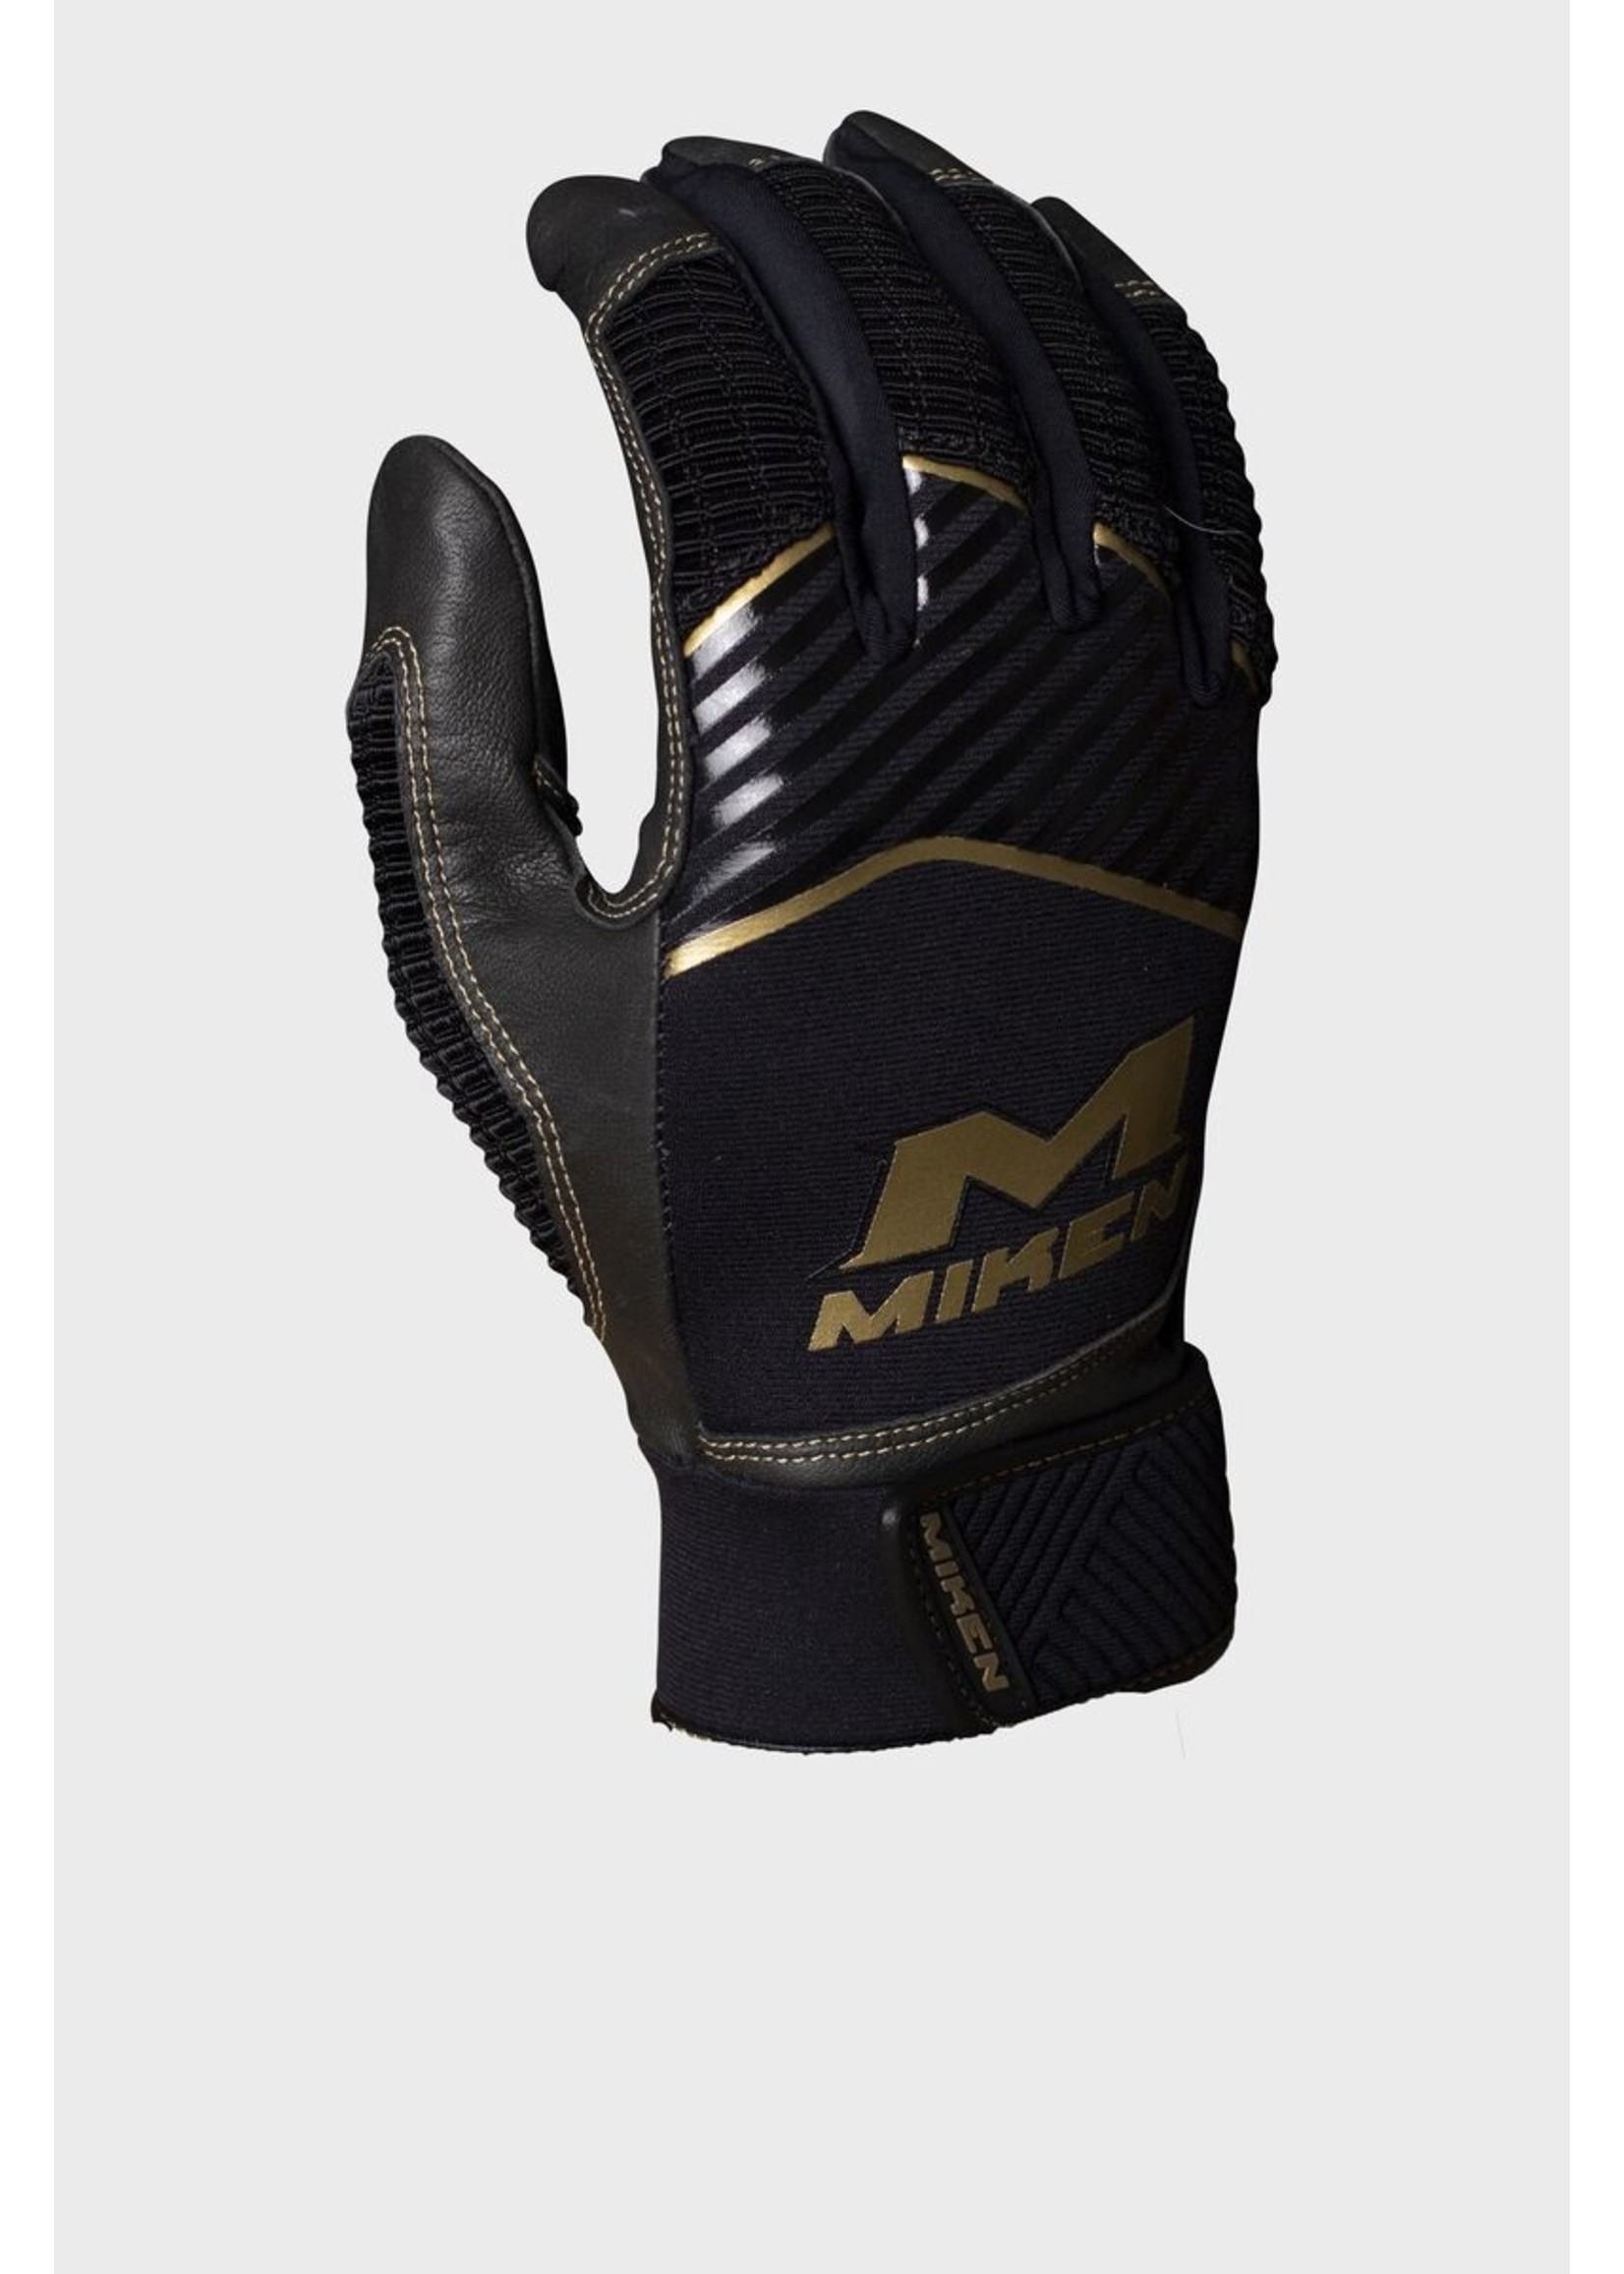 RAWLINGS Miken Pro Gold Batting Gloves